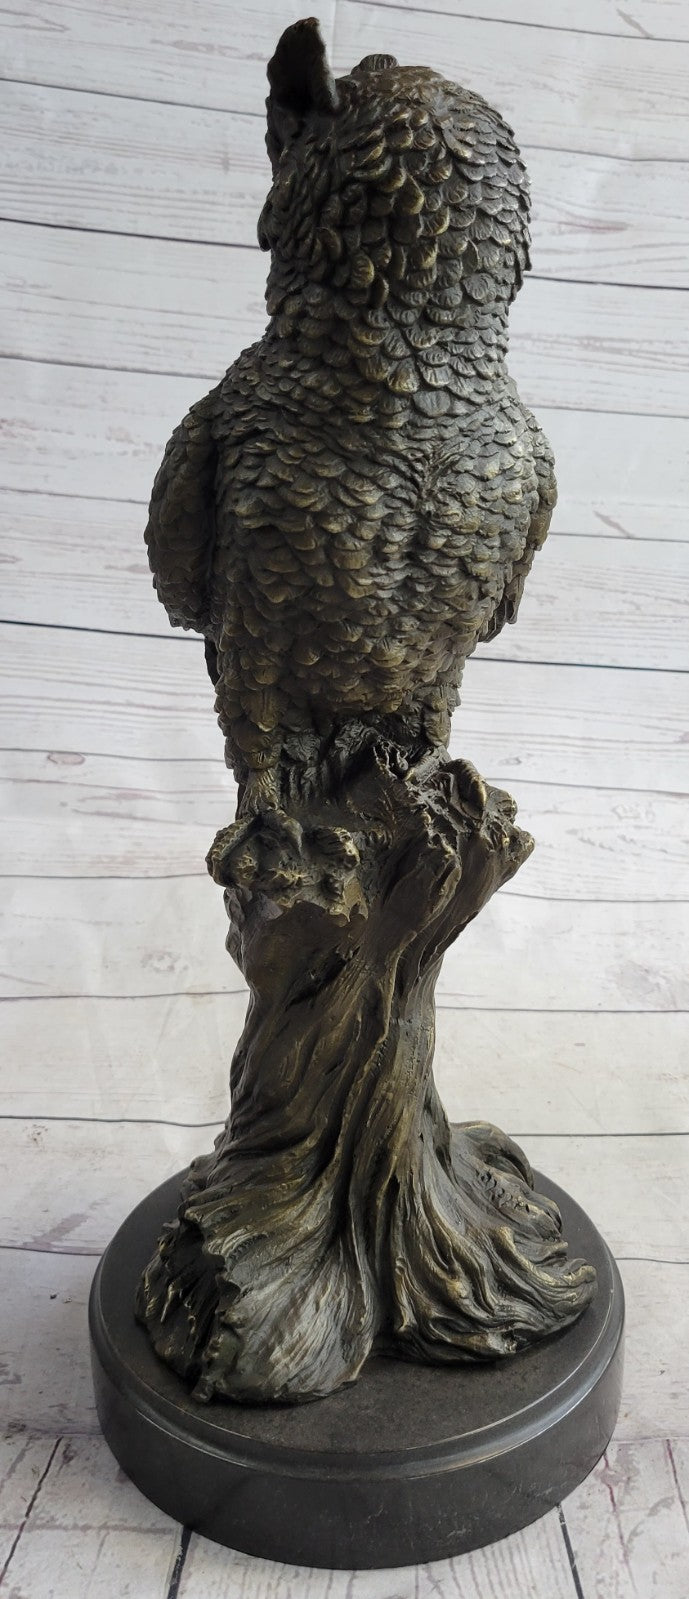 Perched Owl Hot Cast Bronze Signed Original Bronze Art Sculpture Statue Outdoor